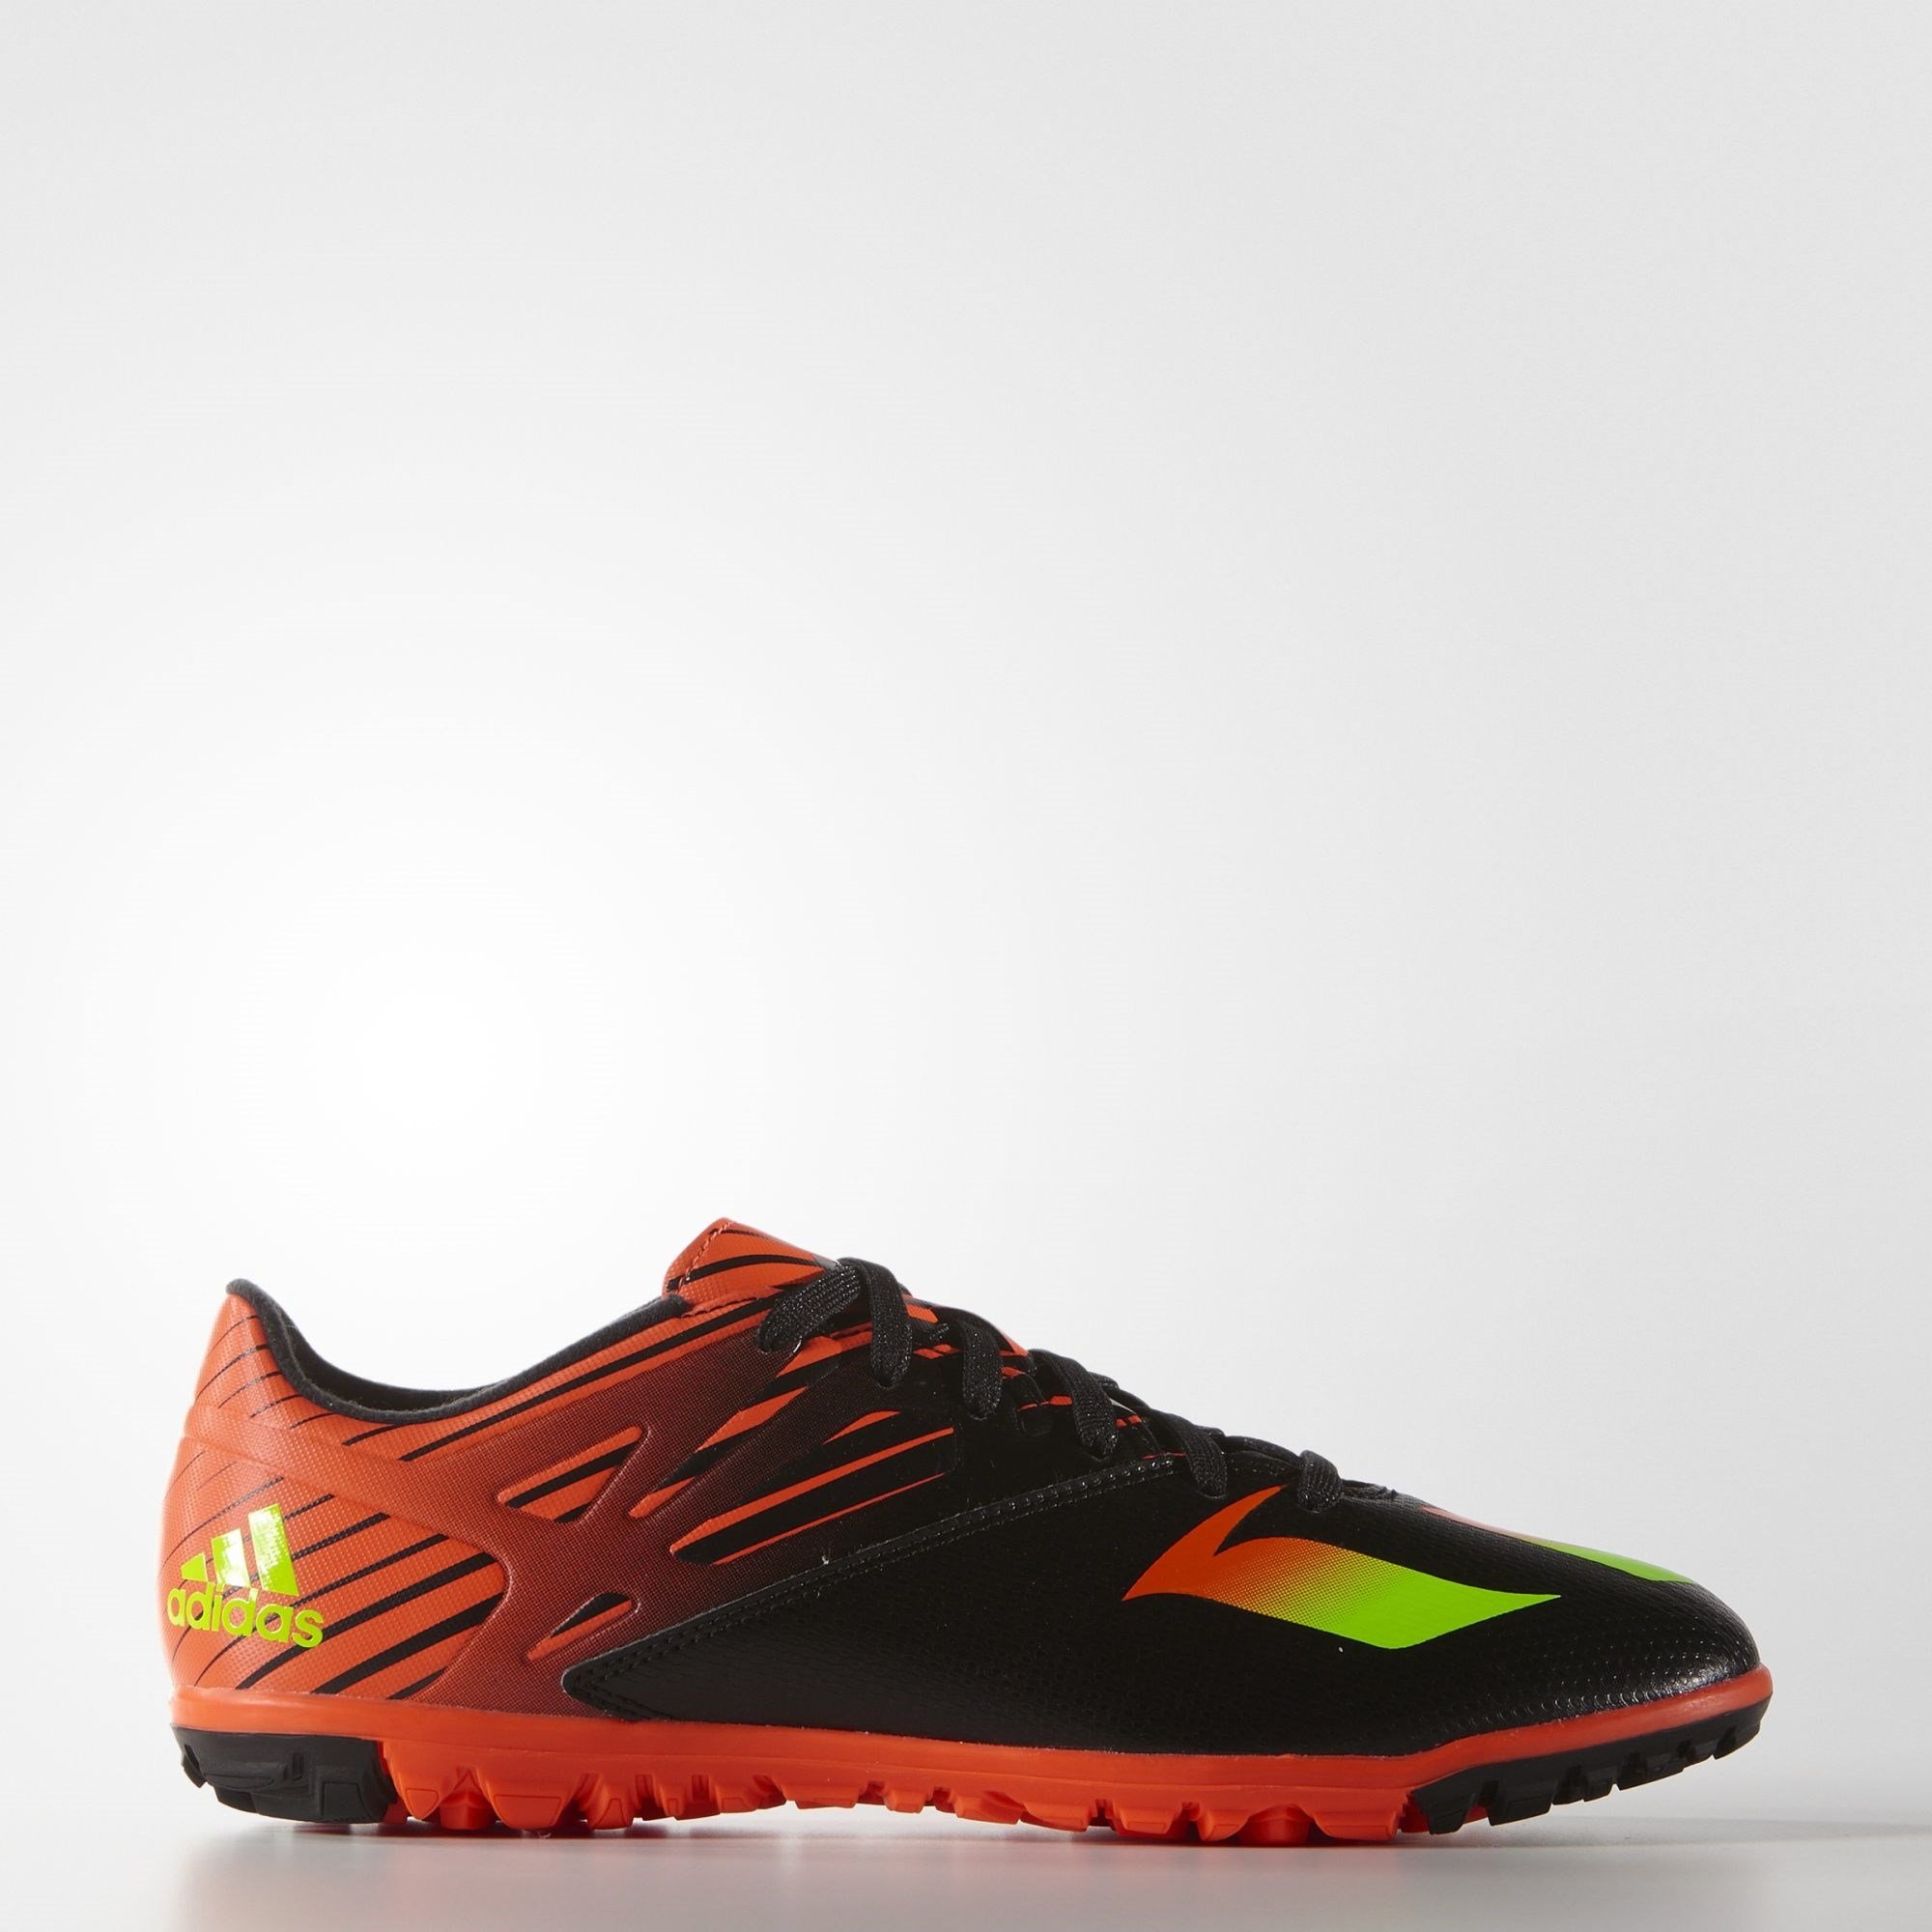 adidas Messi 15.3 TF Halı Saha Ayakkabısı Ürün kodu: AF4667 | Etichet Sport